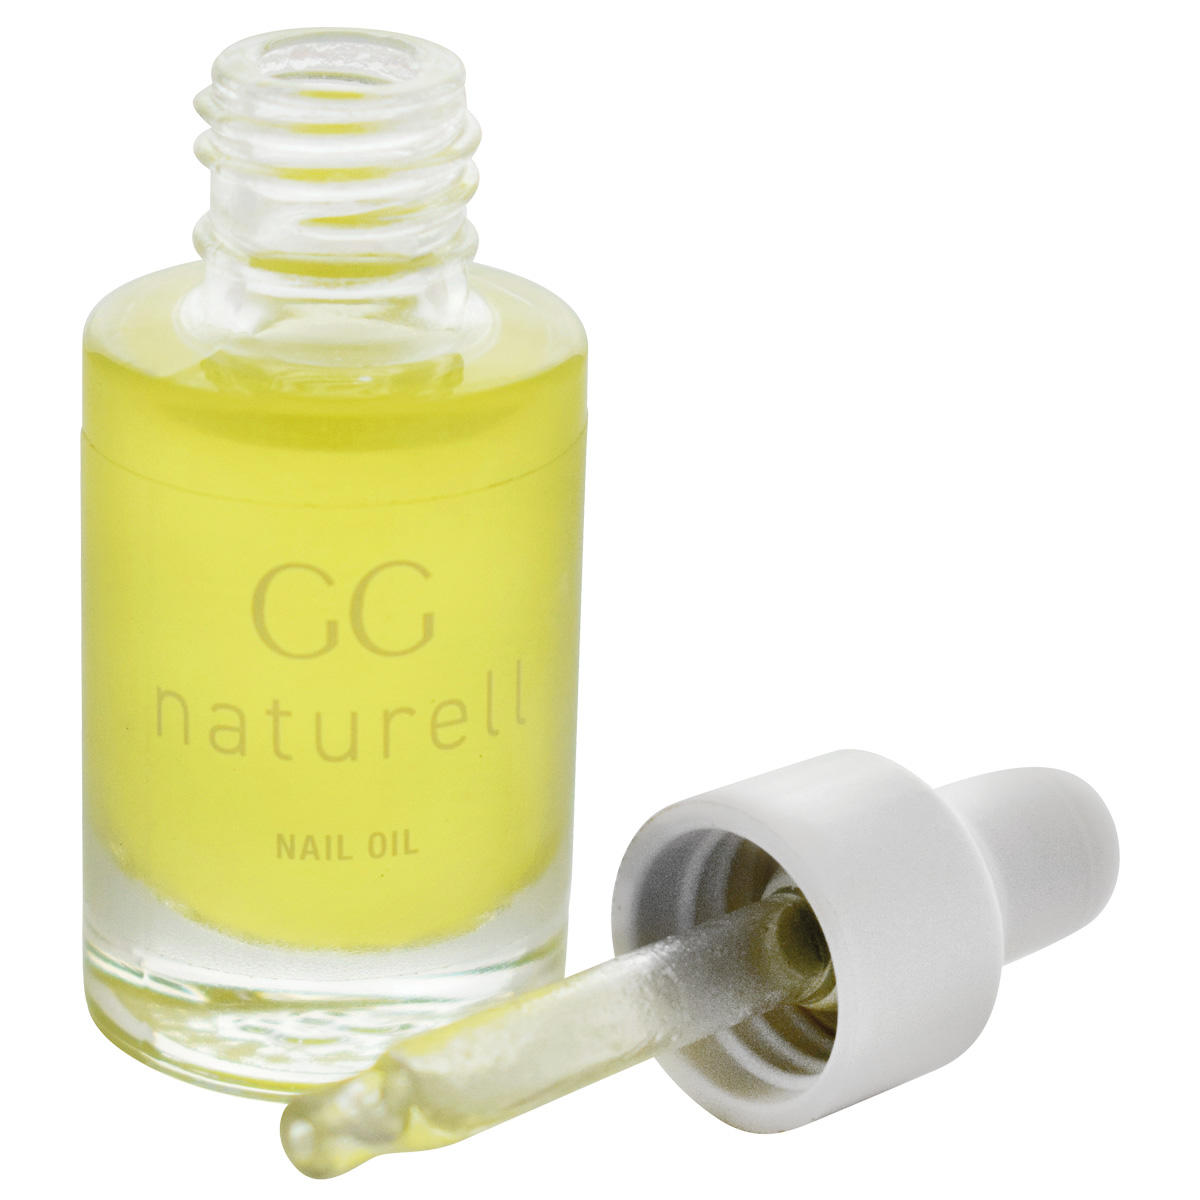 GERTRAUD GRUBER GG naturell Nail Oil 5 ml - 1